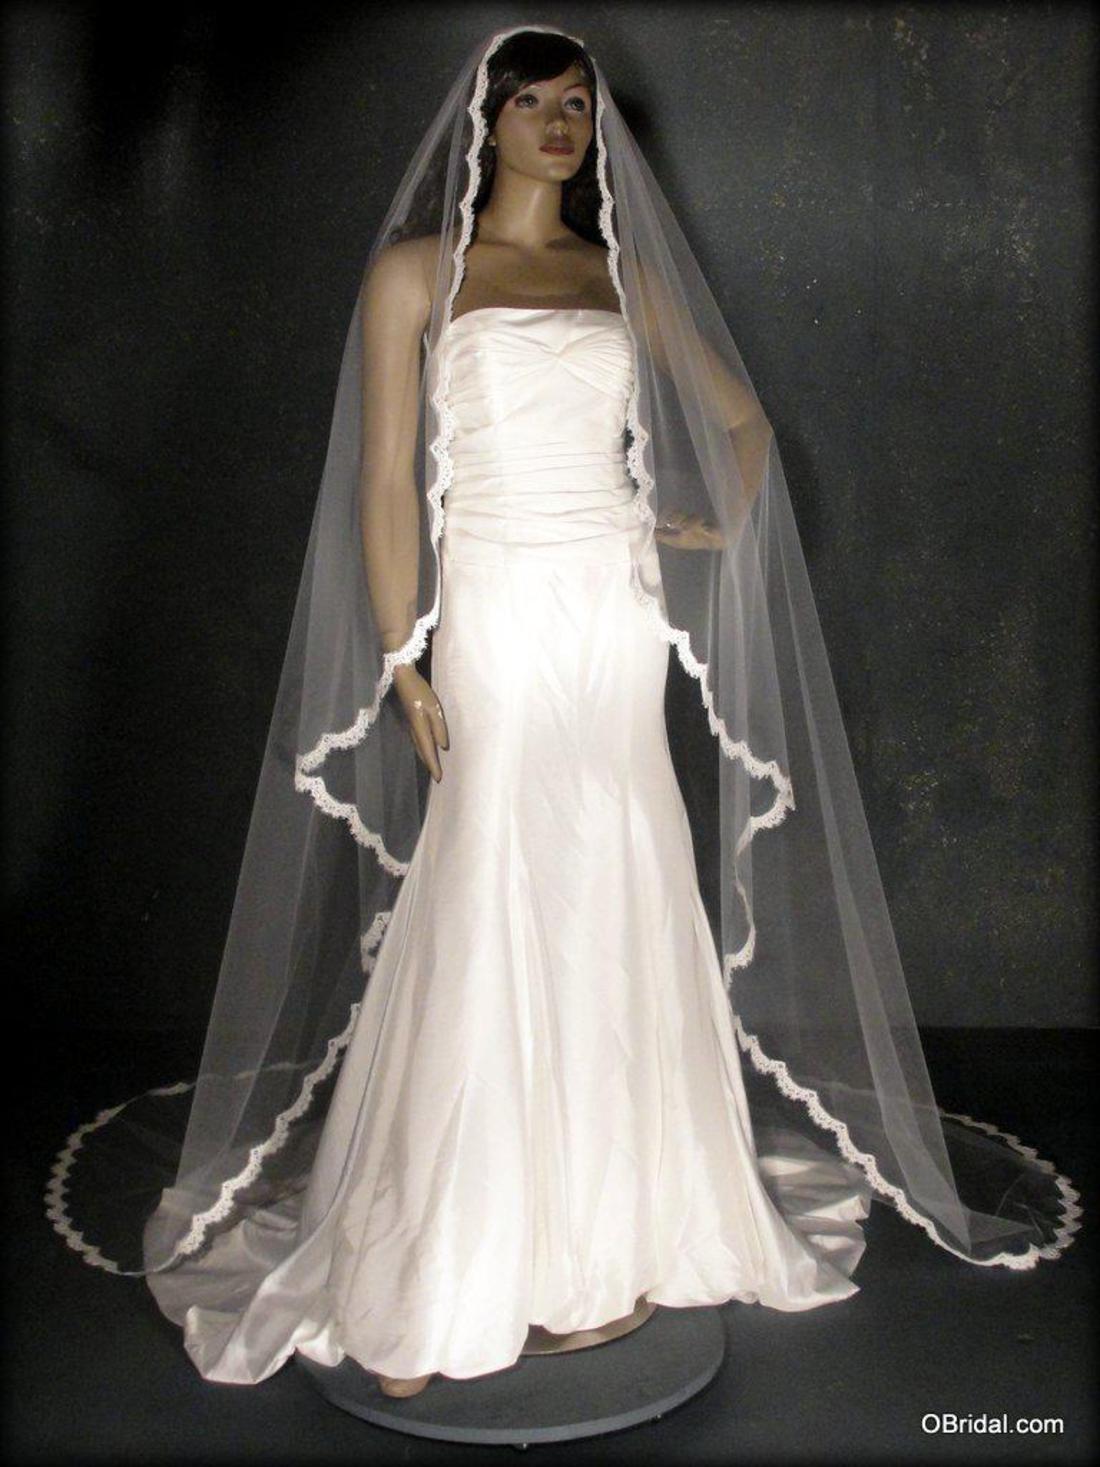 Wedding Veils - Bridal Lace Mantilla Veil - Cathedral Length White